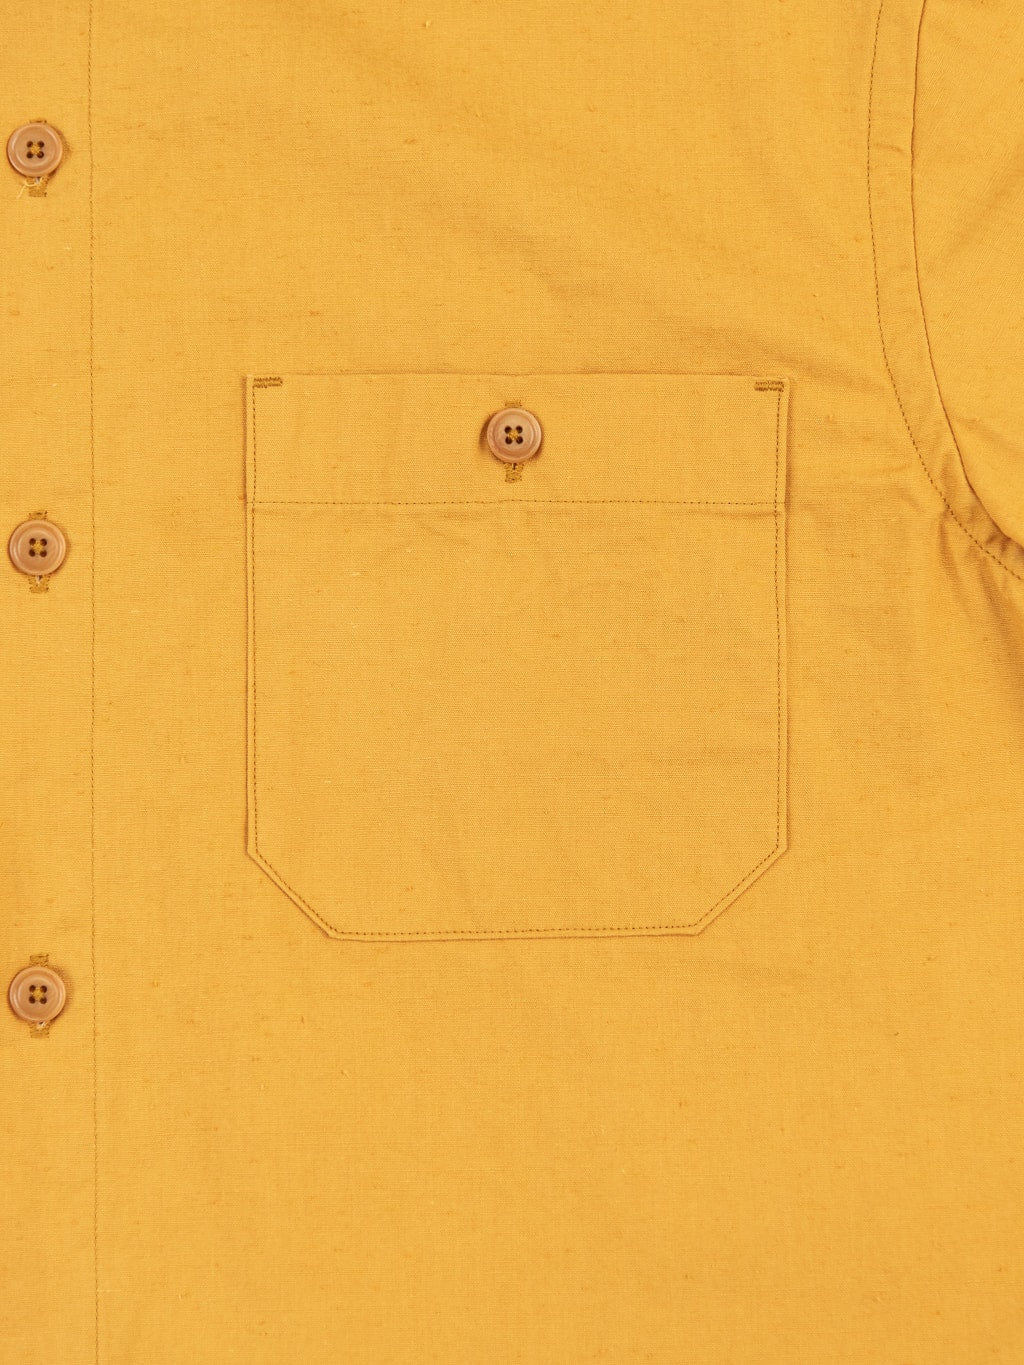 ues denim mechanic shirt sleeves shirt pumpkin yellow pocket